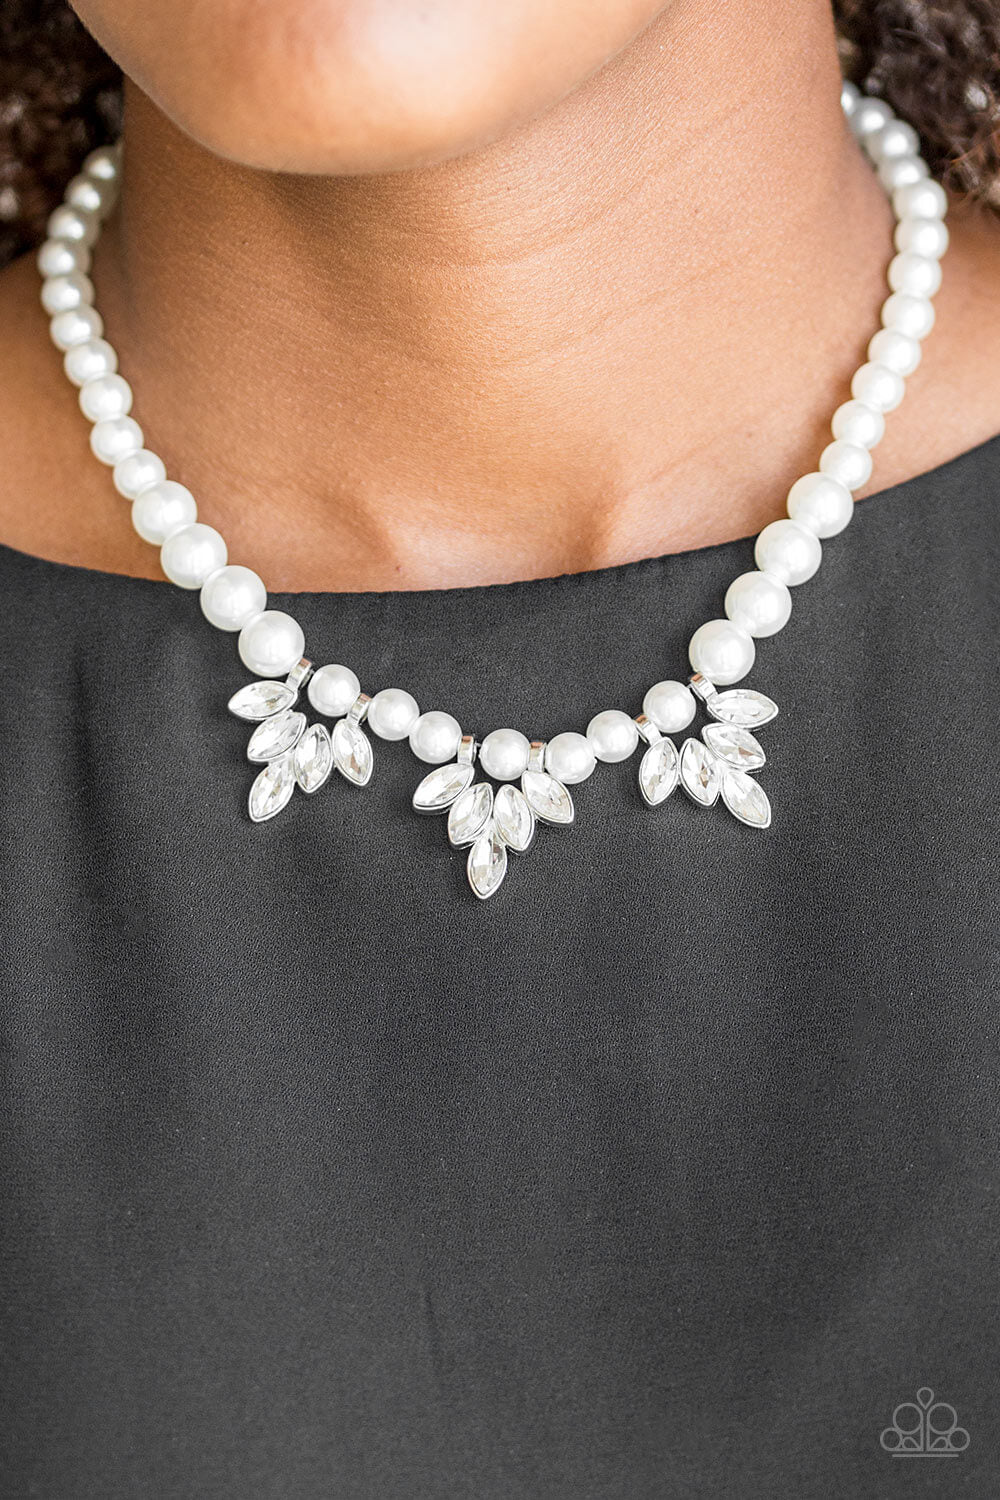 Society Socialite - White Pearl Necklace Set - Princess Glam Shop